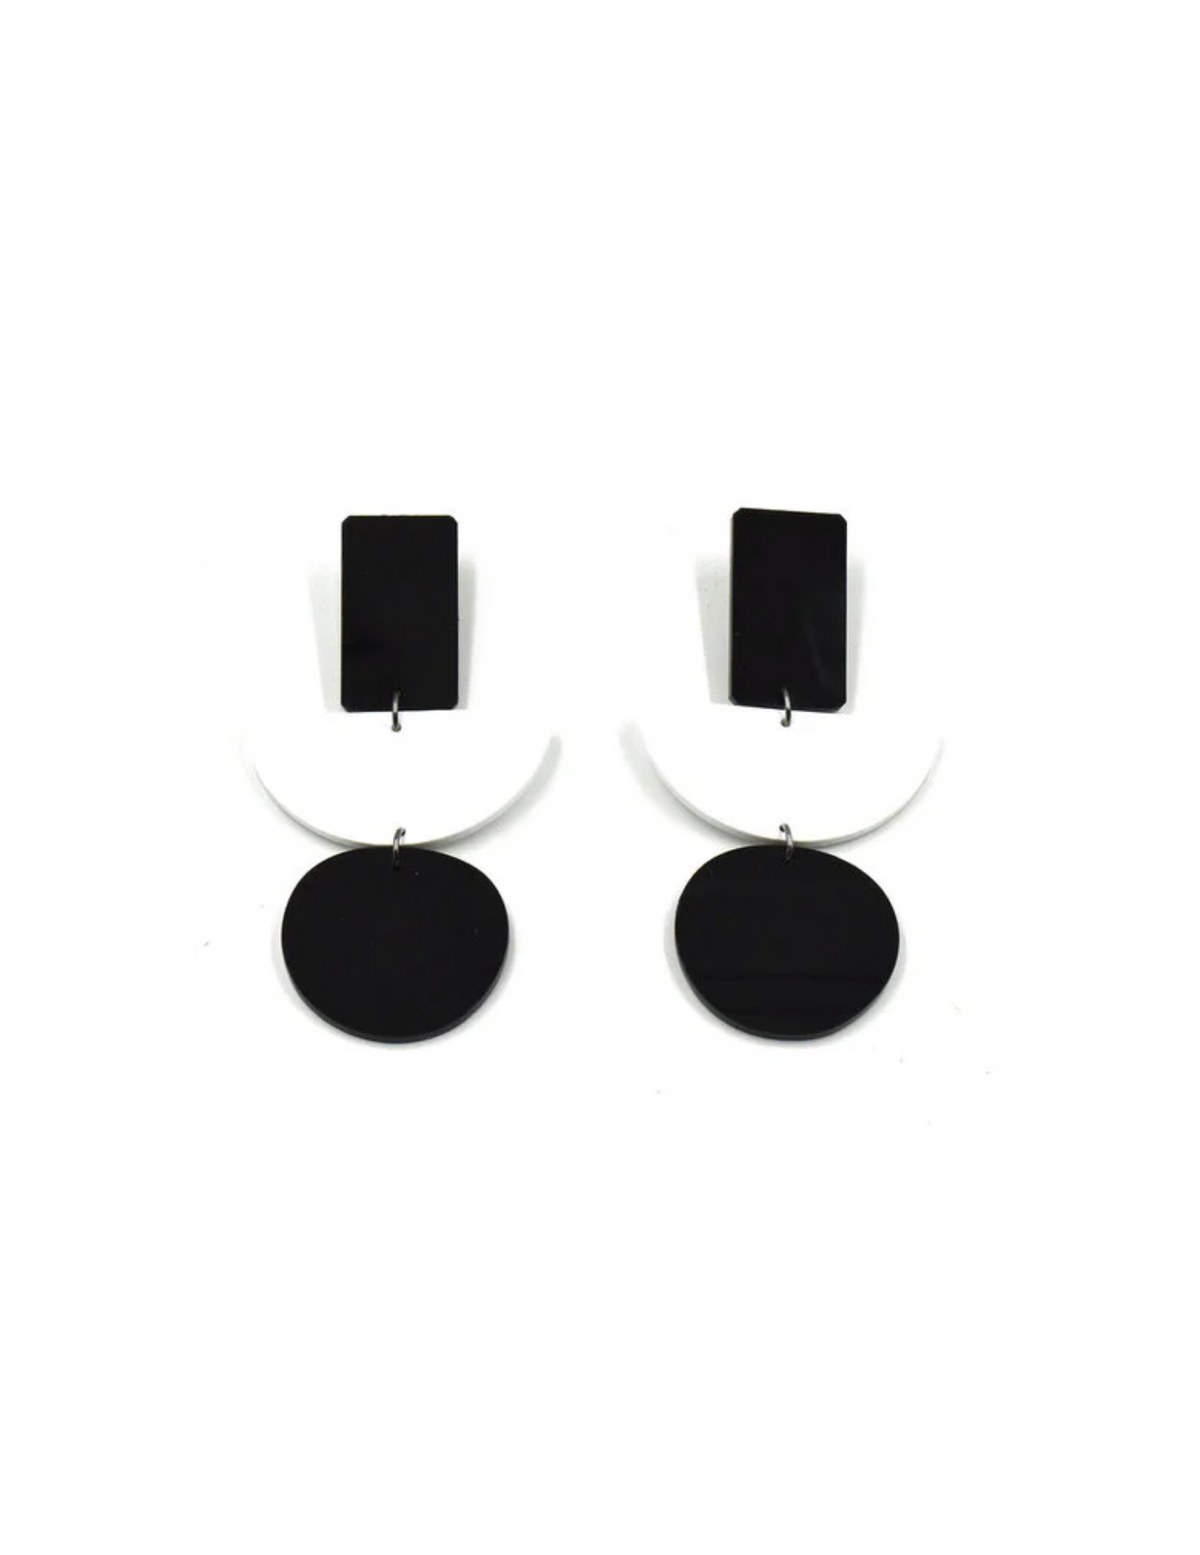 CB456 - Half Moon earrings in White and Black